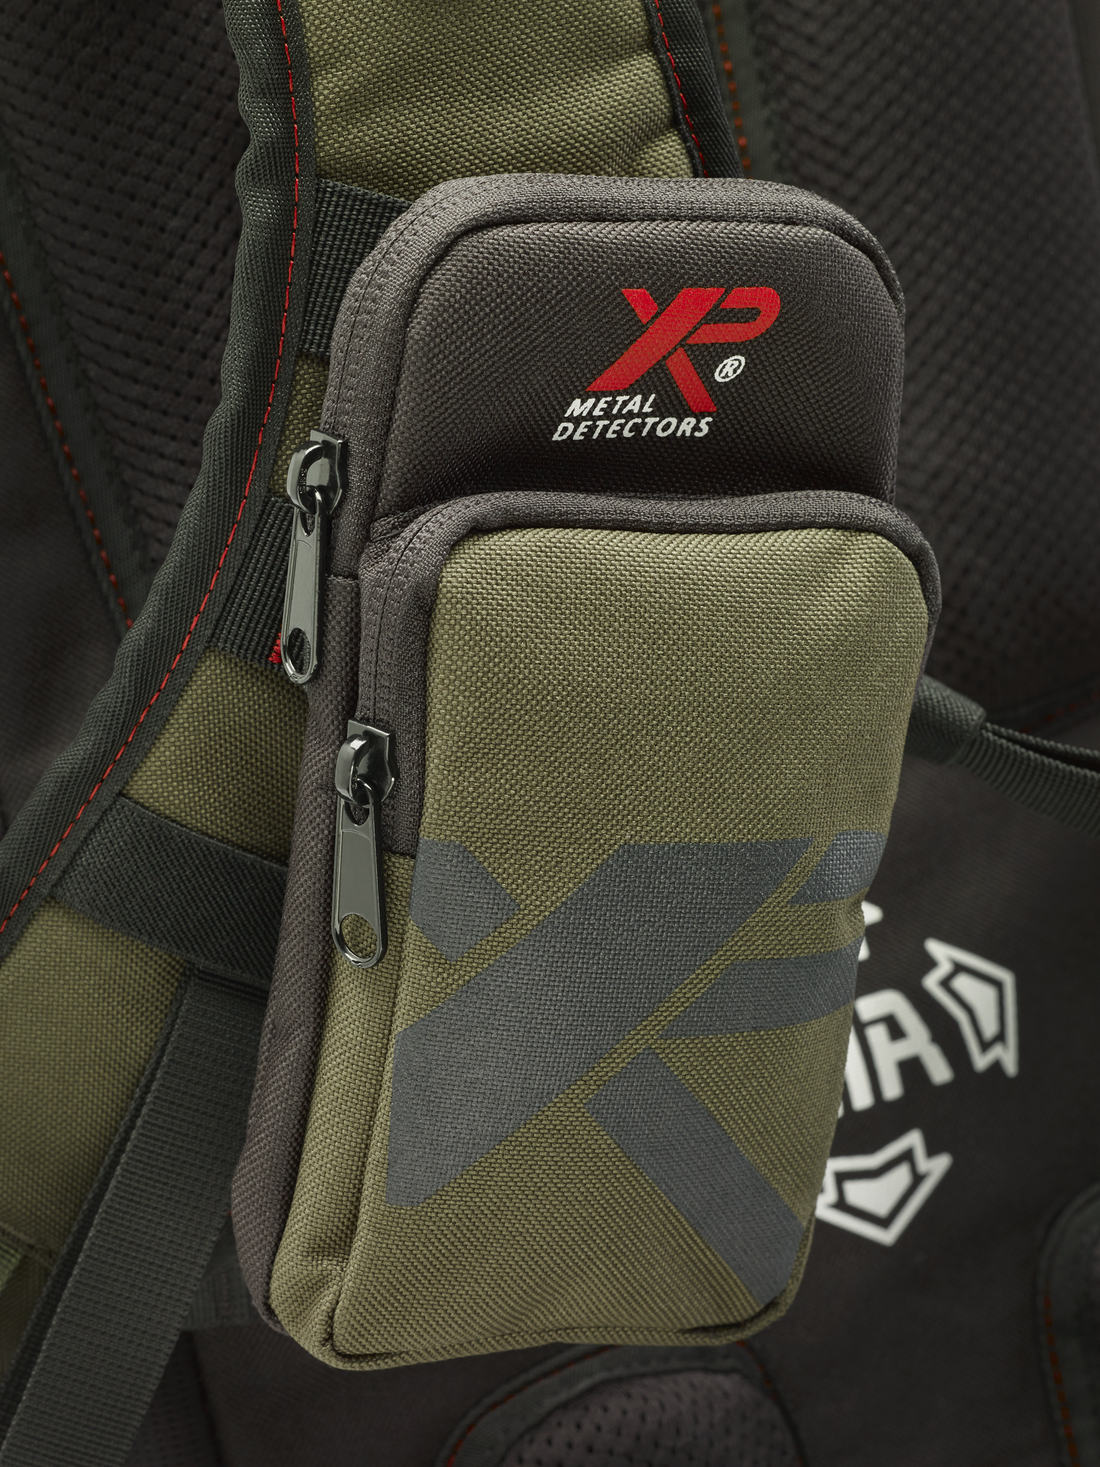 XP Metal Detector Backpack 280 removeable pocket